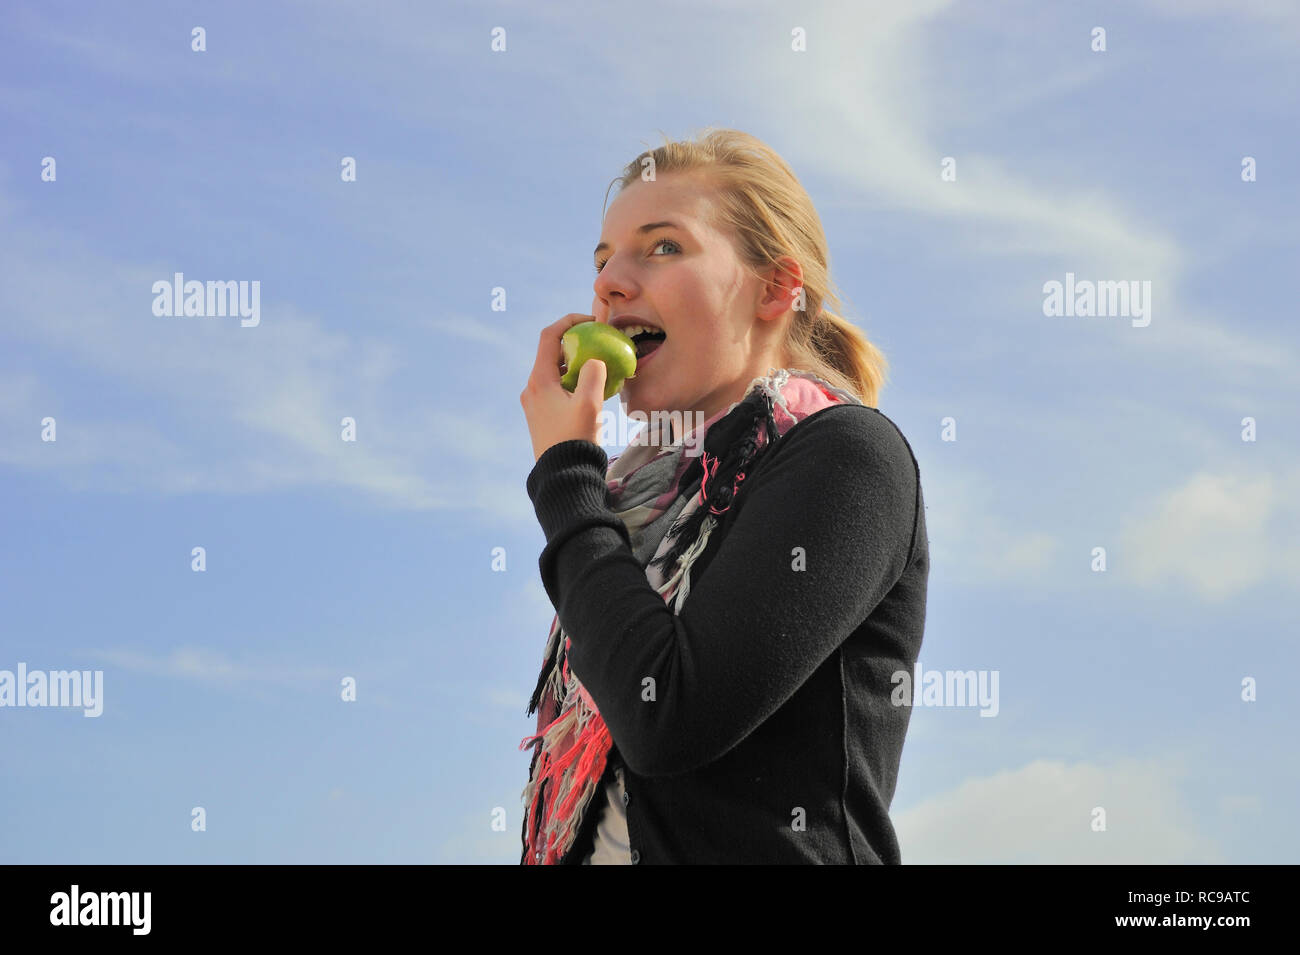 Junge Frau beisst in einen grünen Apfel - in den sauren Apfel beissen | jeune femme mange une pomme verte - d'avaler une pilule amère ou de saisir l'natt Banque D'Images